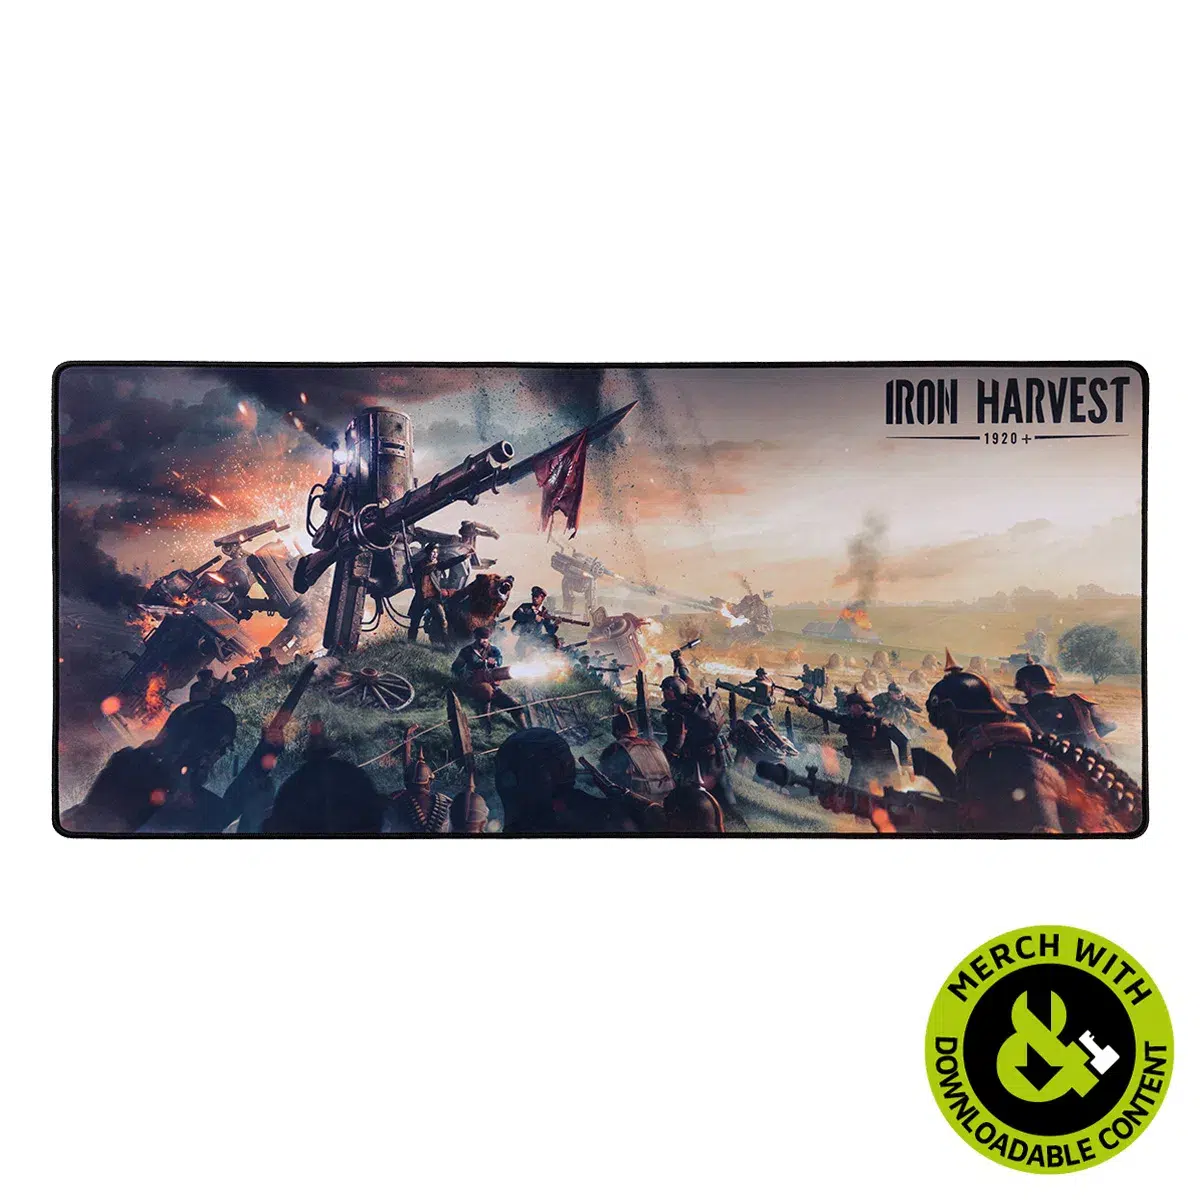 Iron Harvest Mousepad "Battlefield" m2 Cover